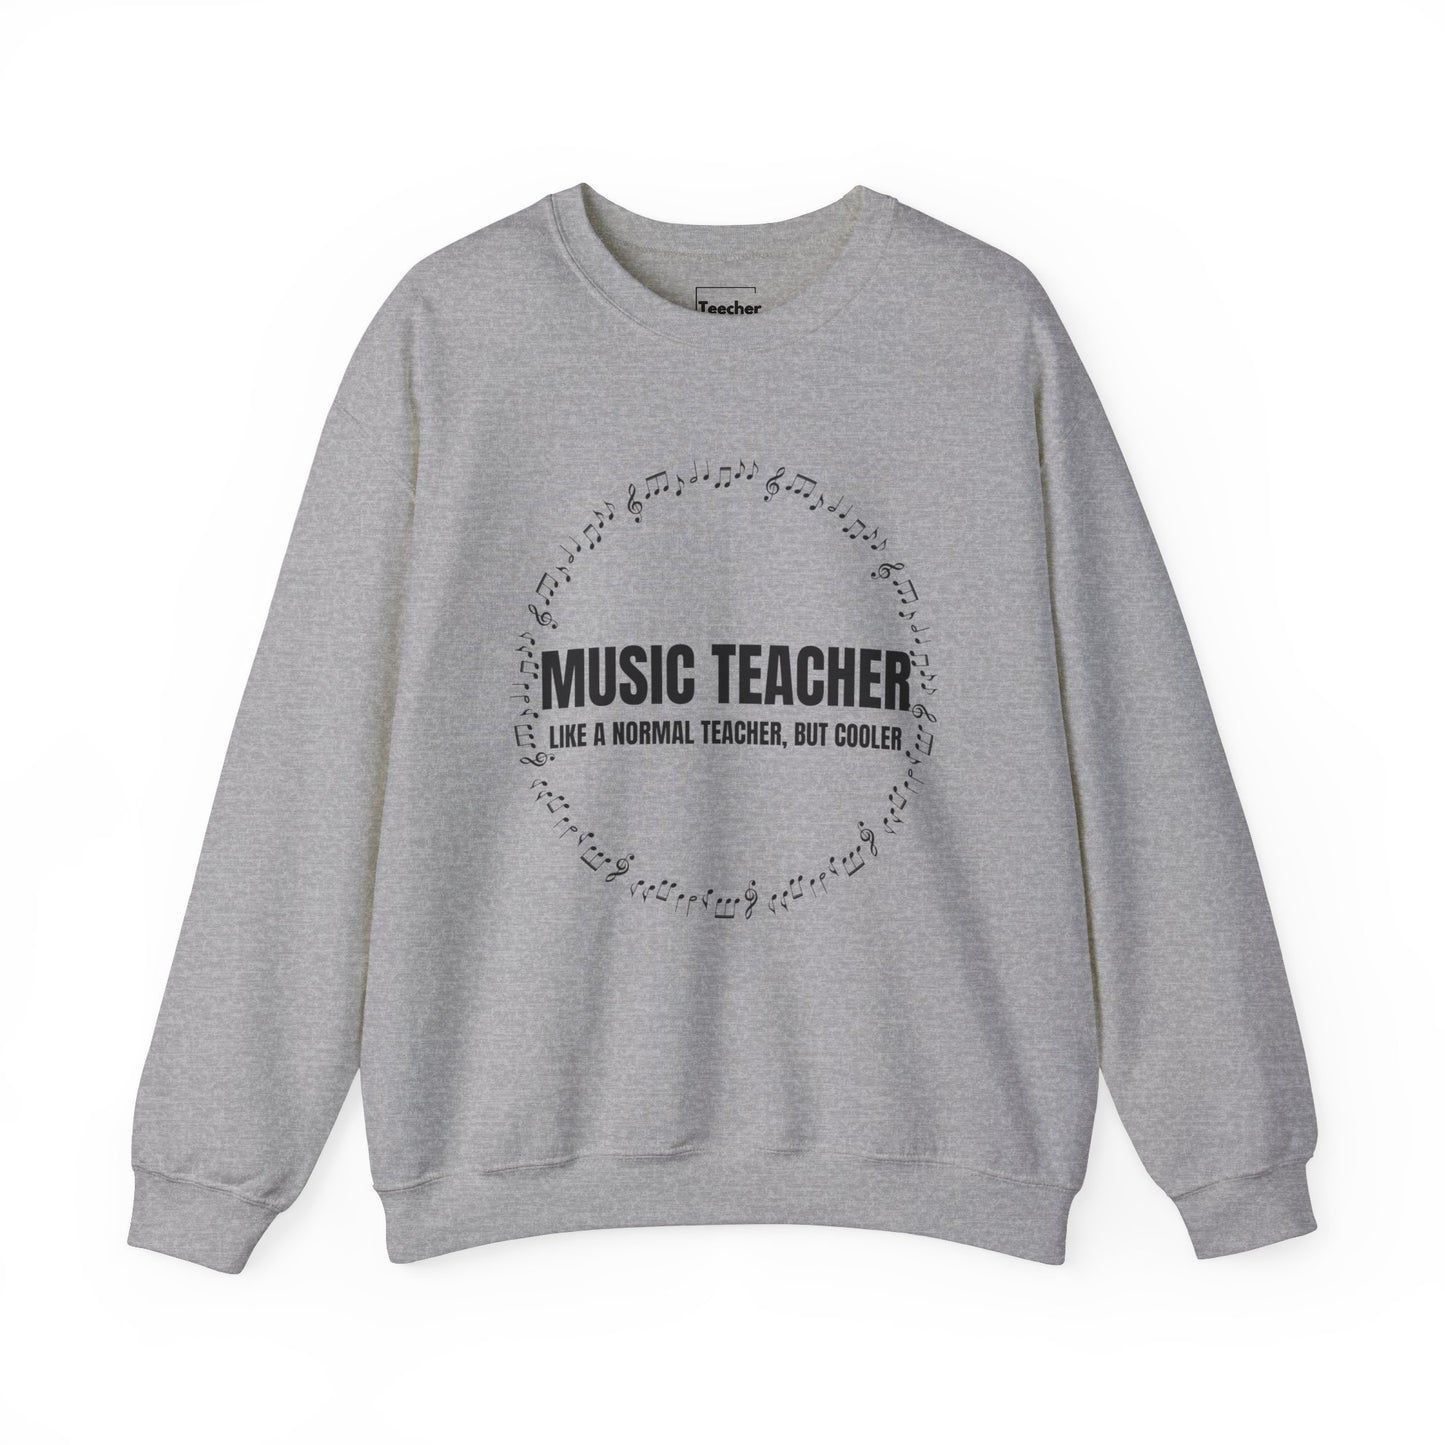 Cool Music Teacher Sweatshirt